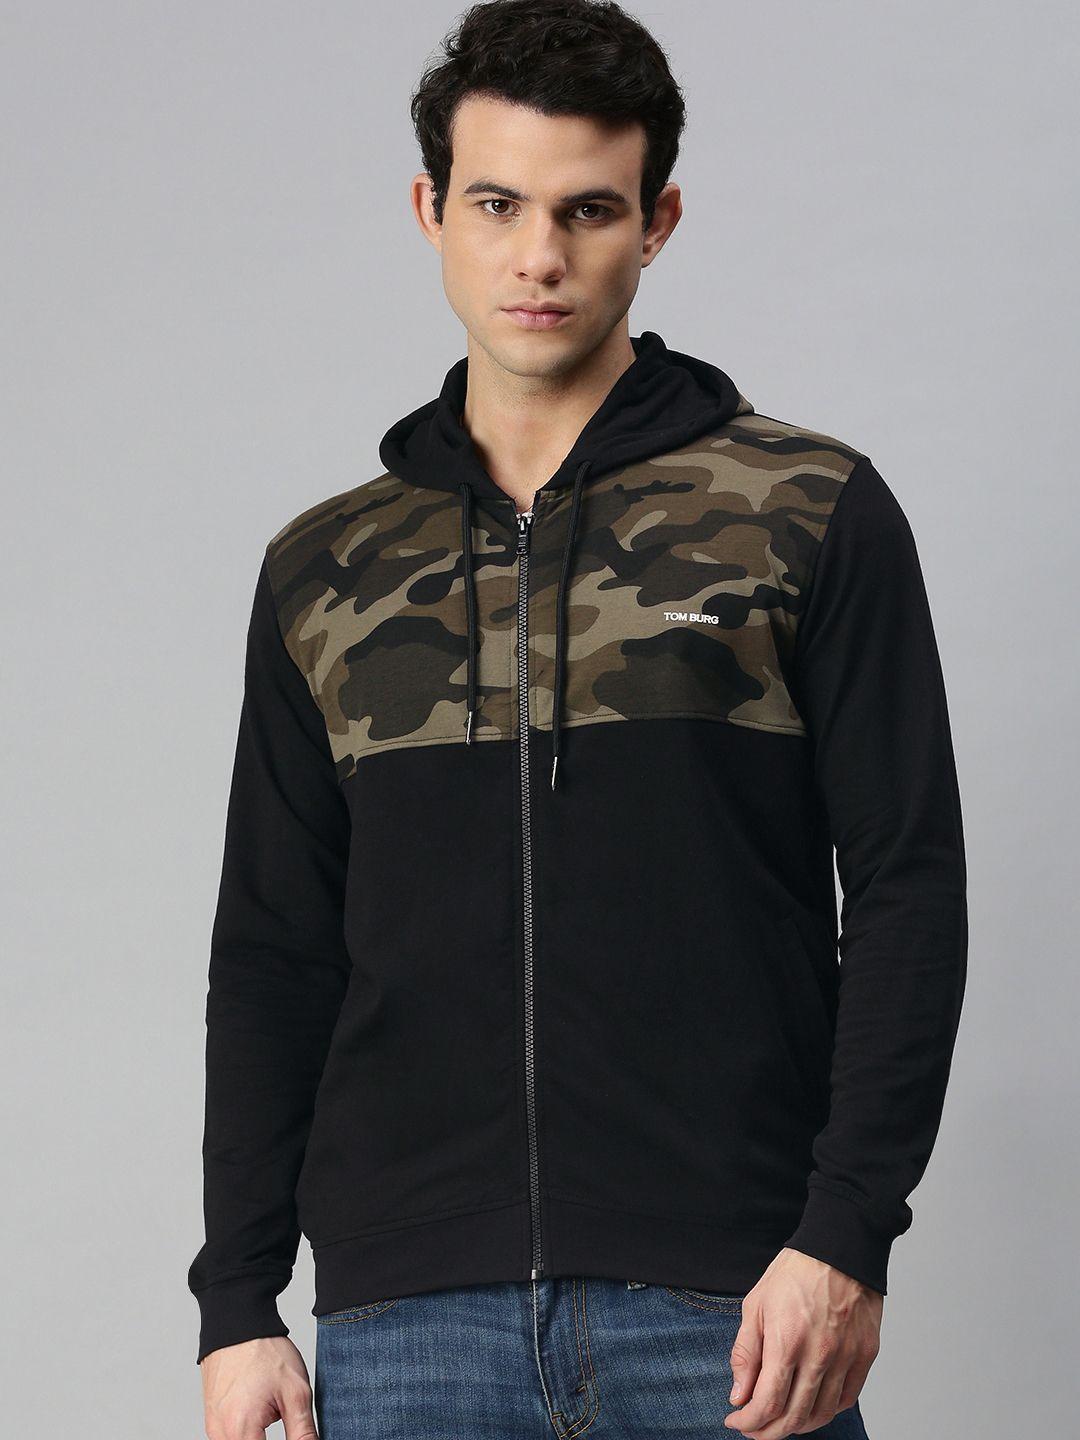 tom-burg-men-khaki-&-black-camouflage-water-resistant-training-or-gym-tailored-jacket